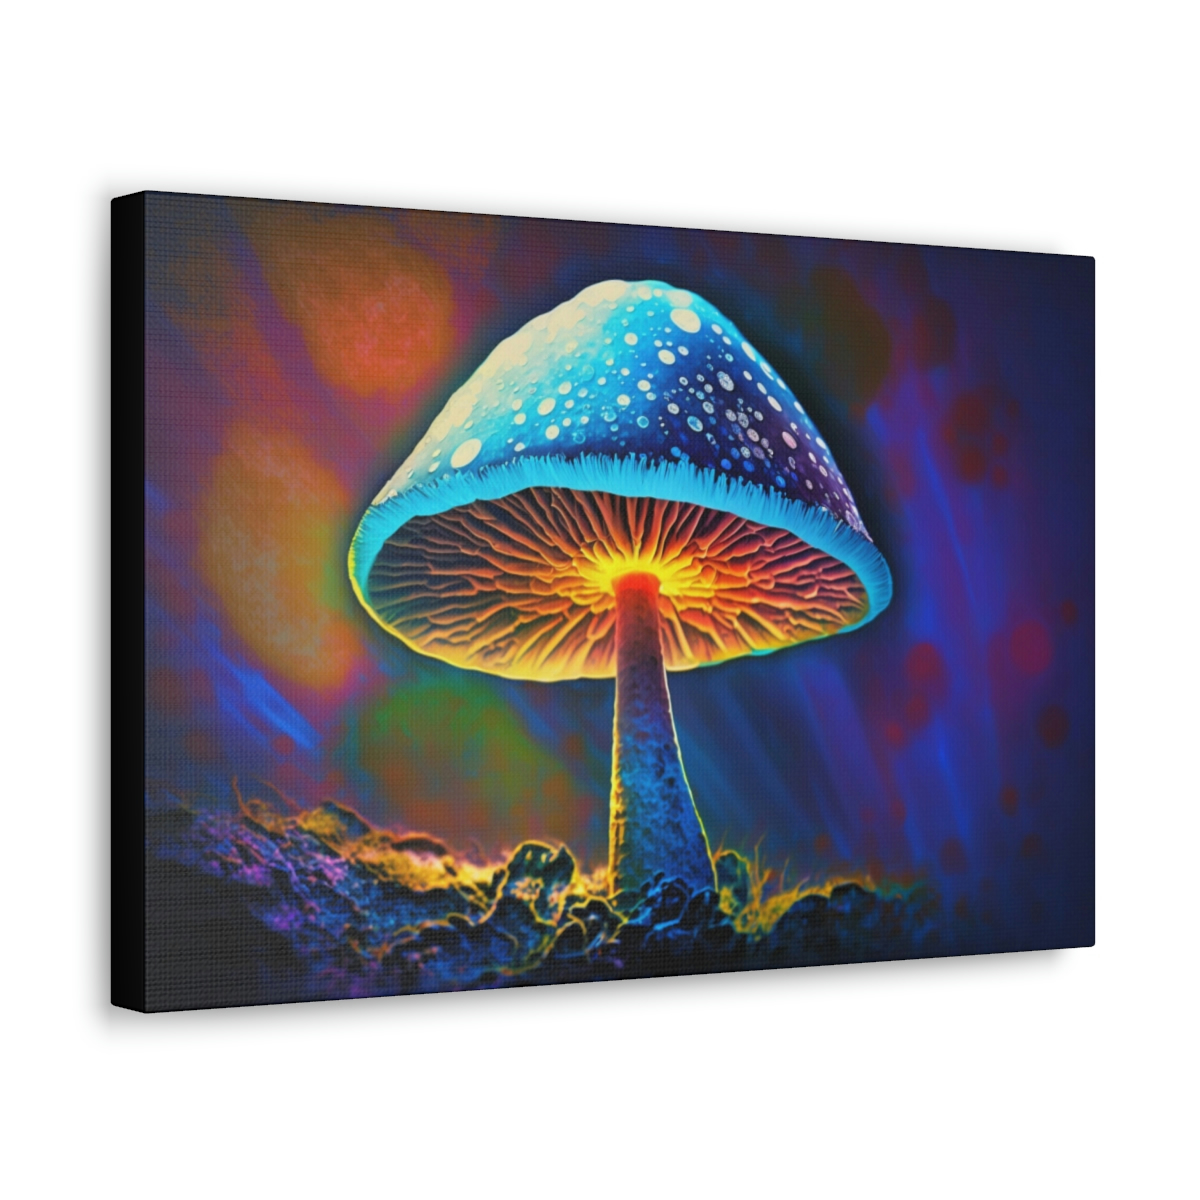 Mushroom Art Canvas Print: Mycological Mindscapes